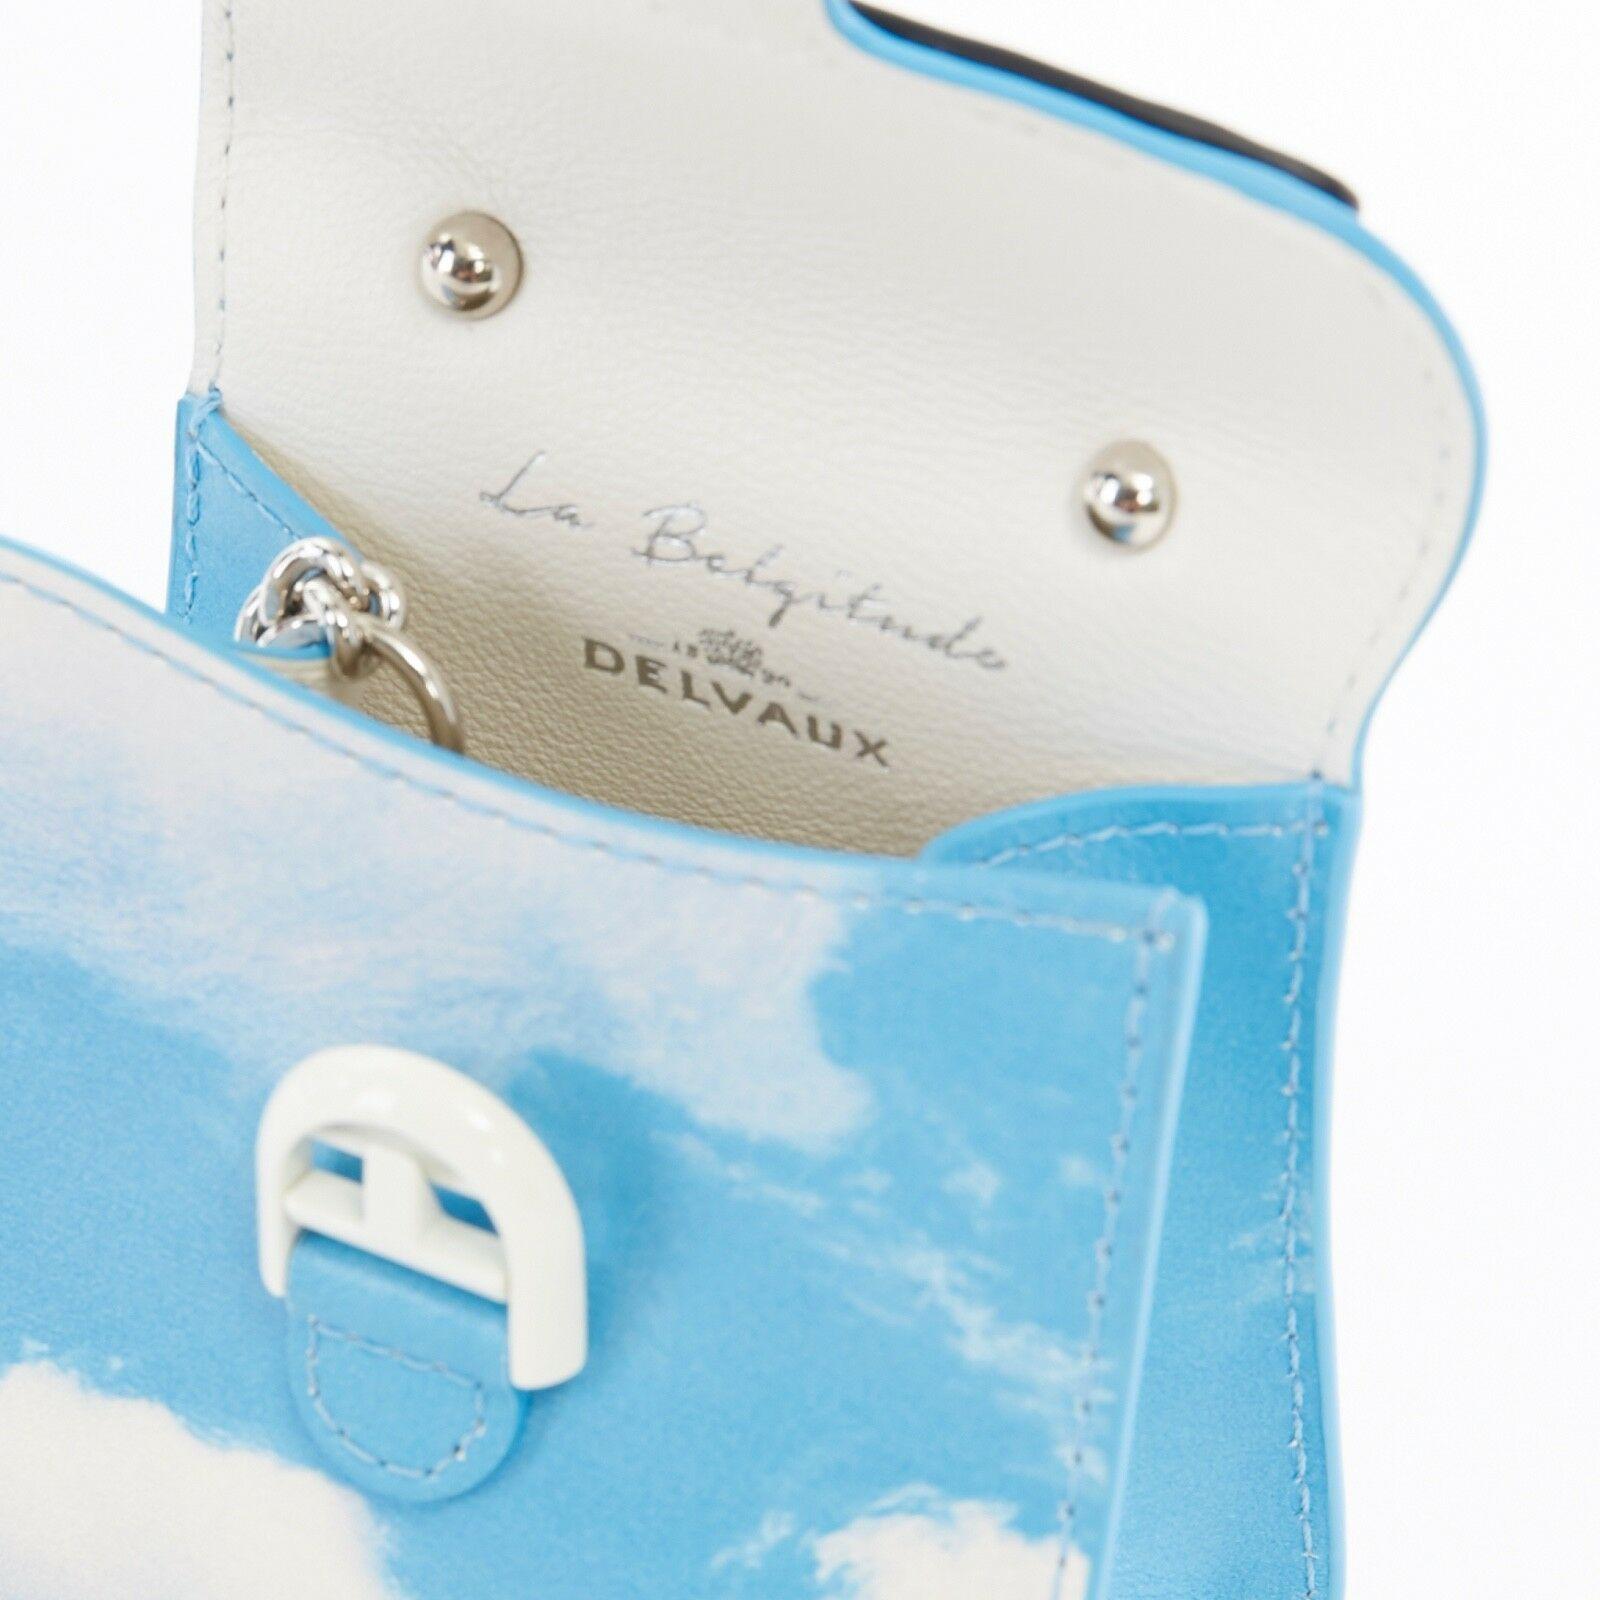 DELVAUX Rene Magritte Miniatures Belgitude bowler hat cloud print mini bag charm 1